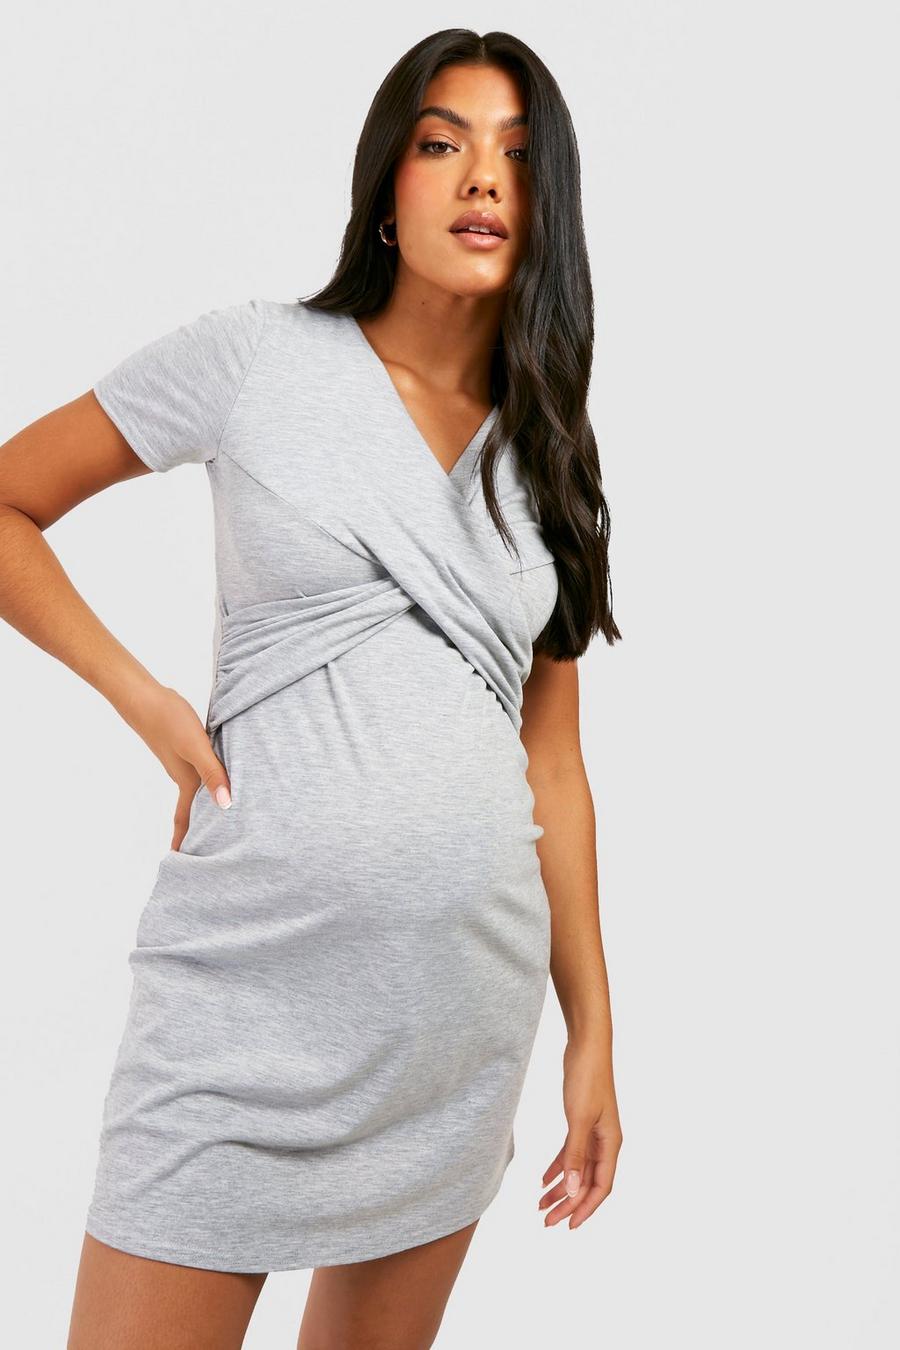 Grey marl כותונת לילה להנקה עם מעטפת קדמית בגדי היריון